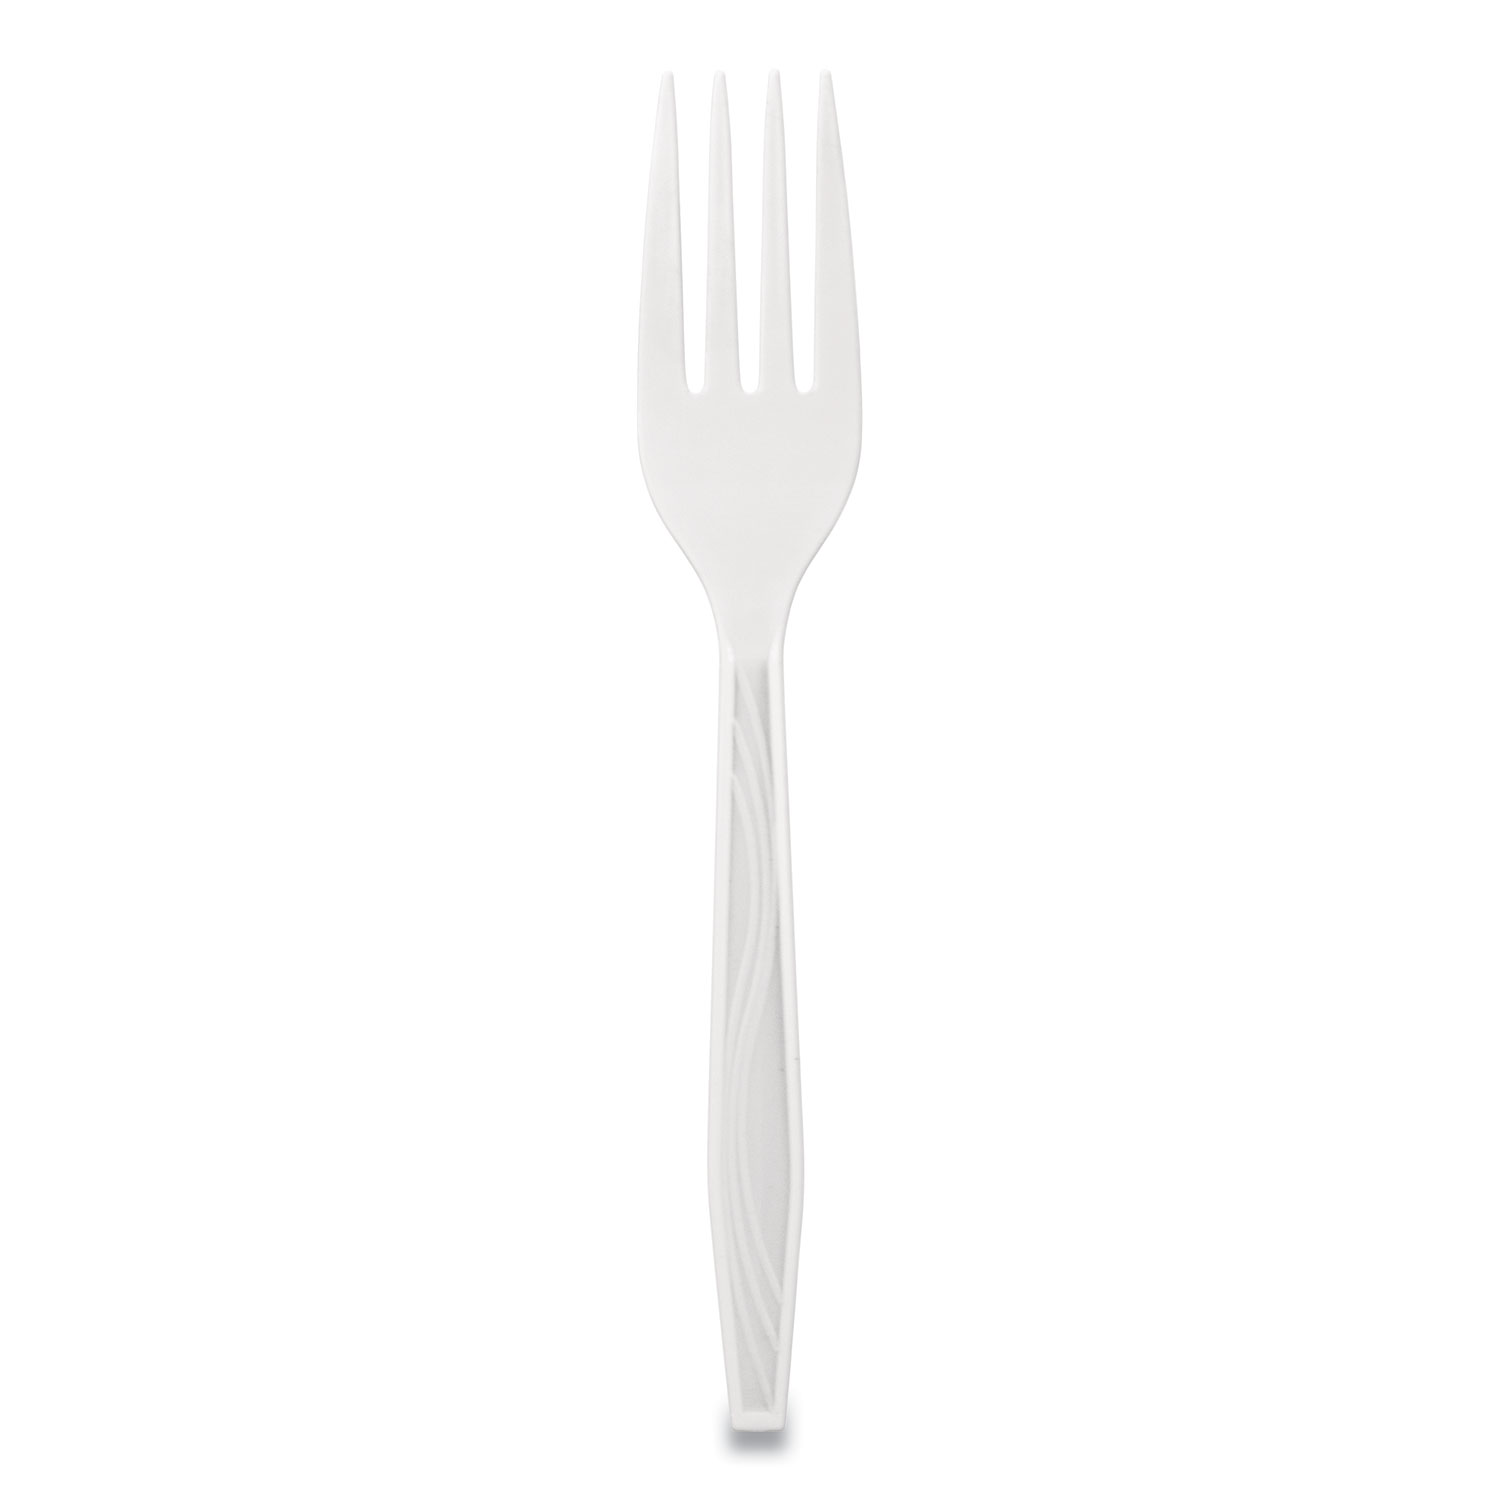 Berkley Square Elegant Dinnerware Heavyweight Cutlery, Polystyrene, Fork, White, 500/Box